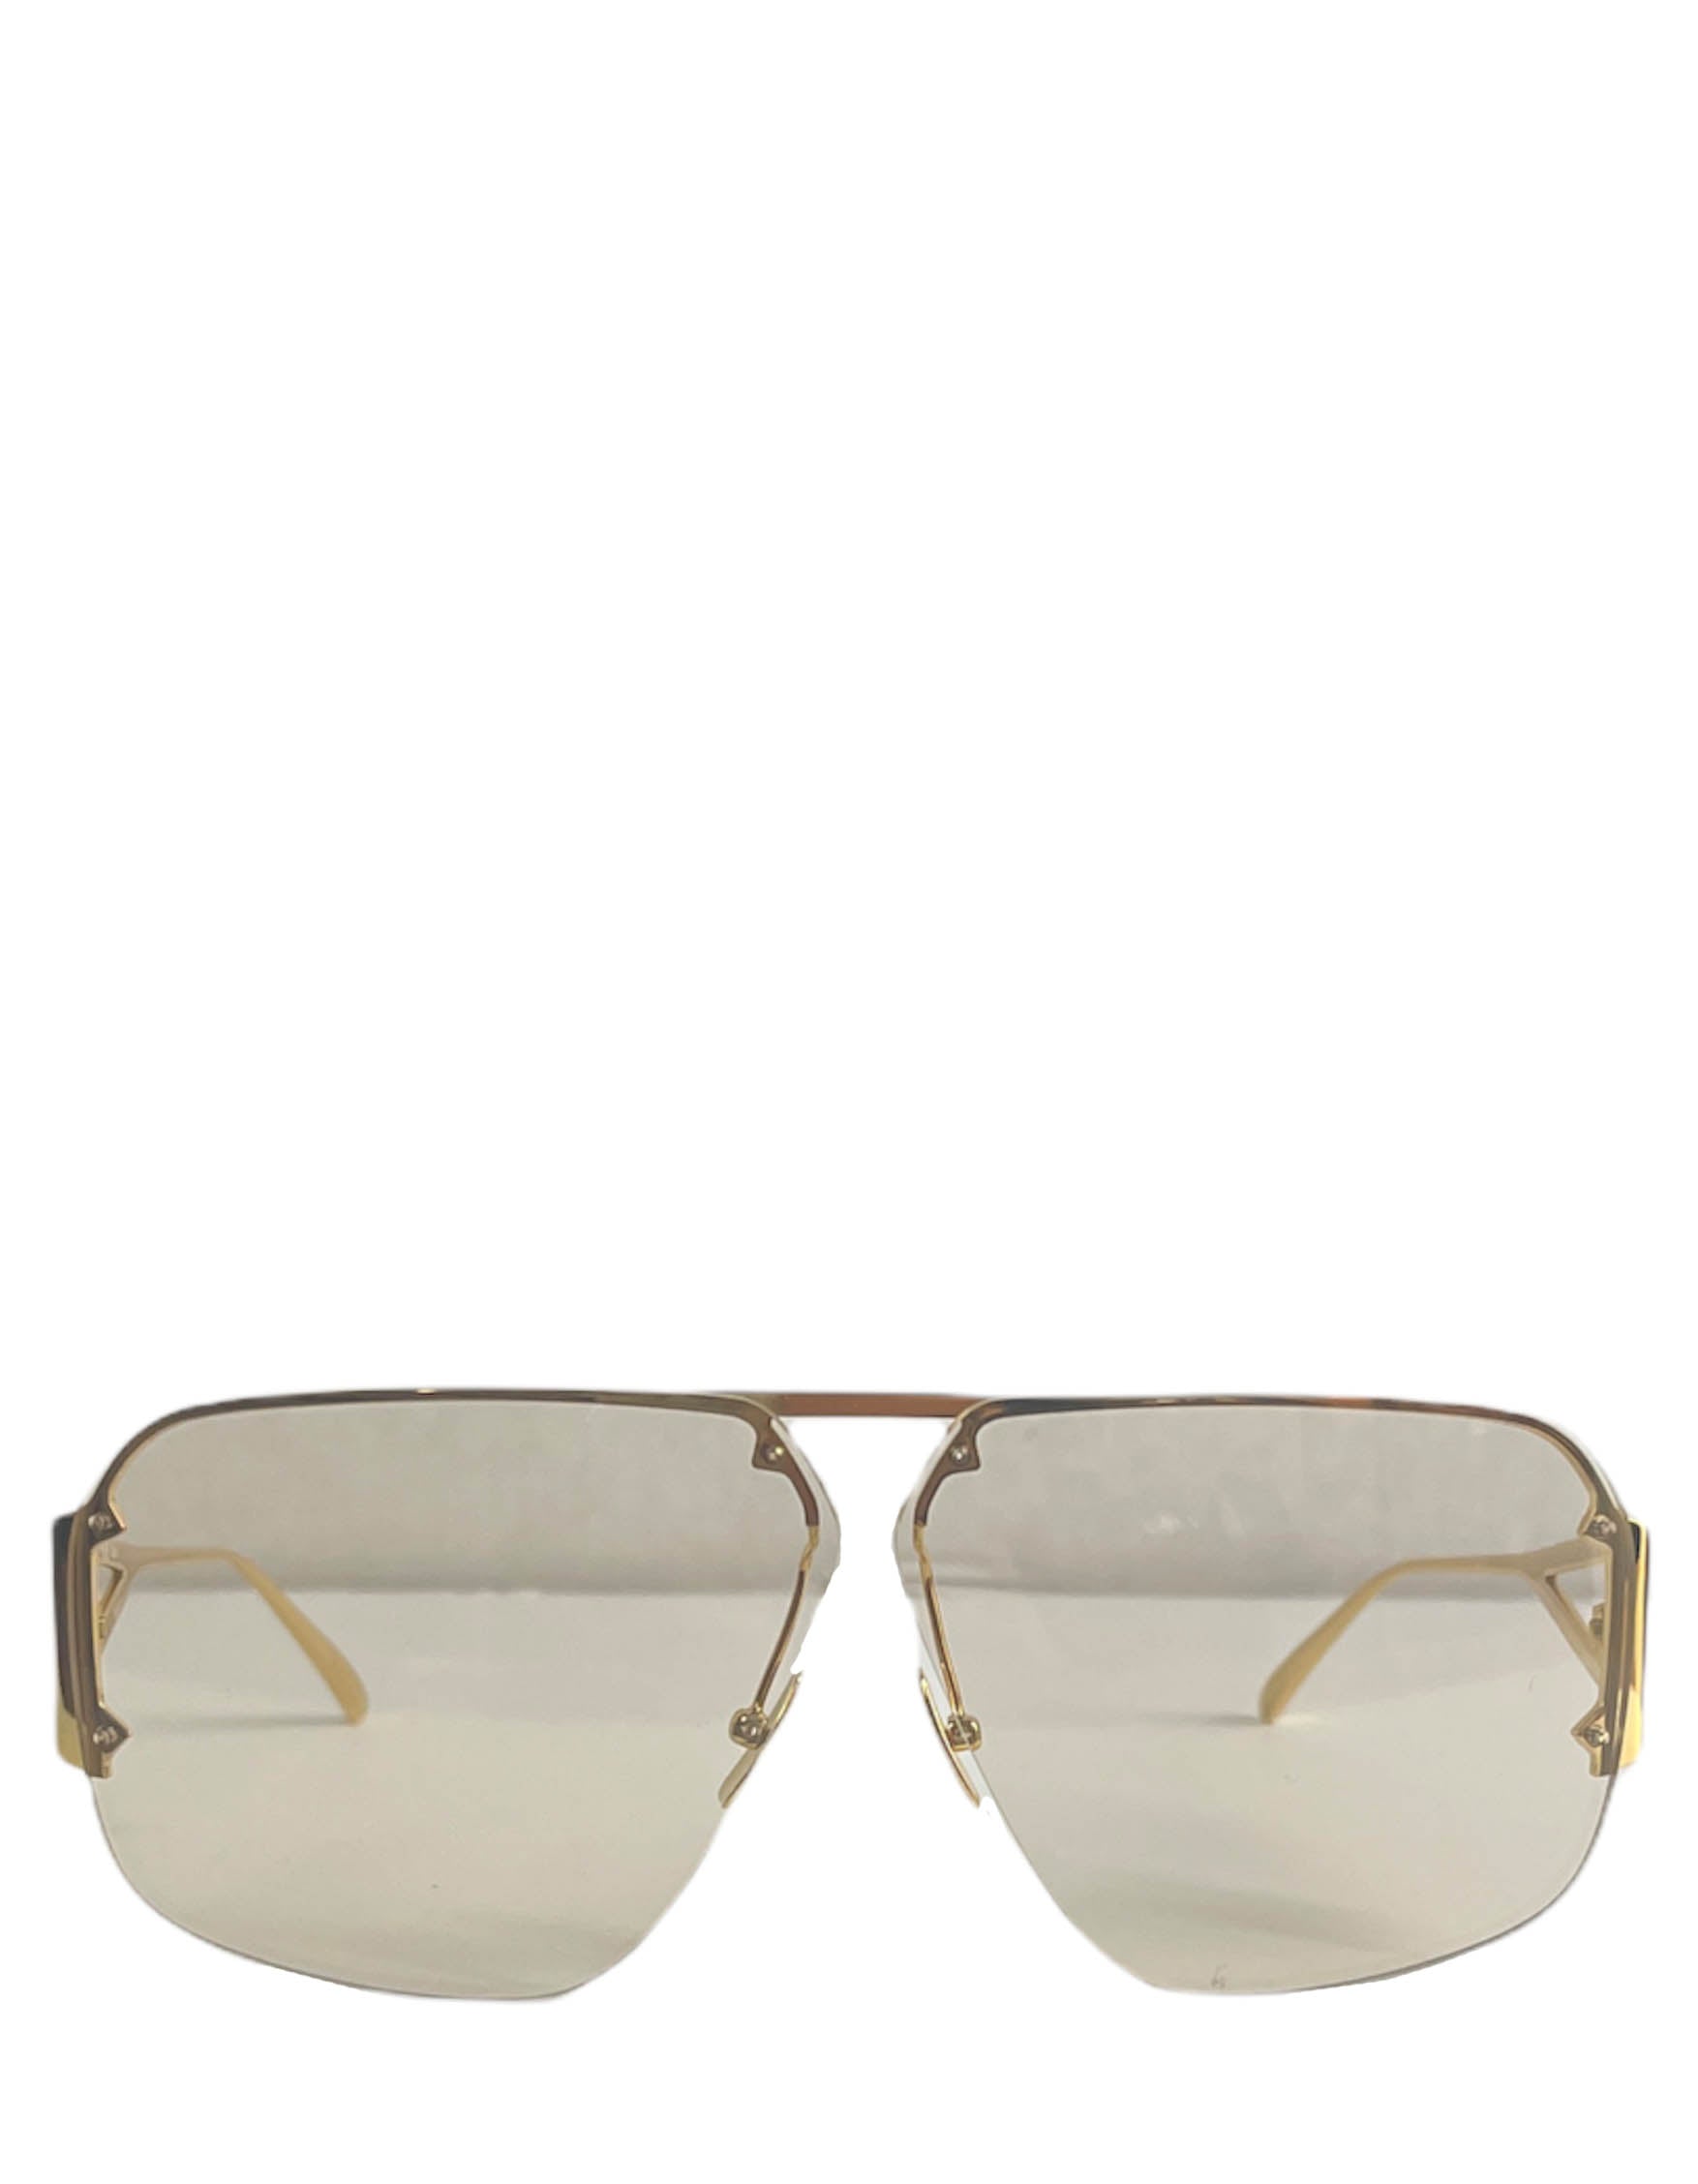 Bottega Veneta Unisex Gold Aviator-Style Sunglasses